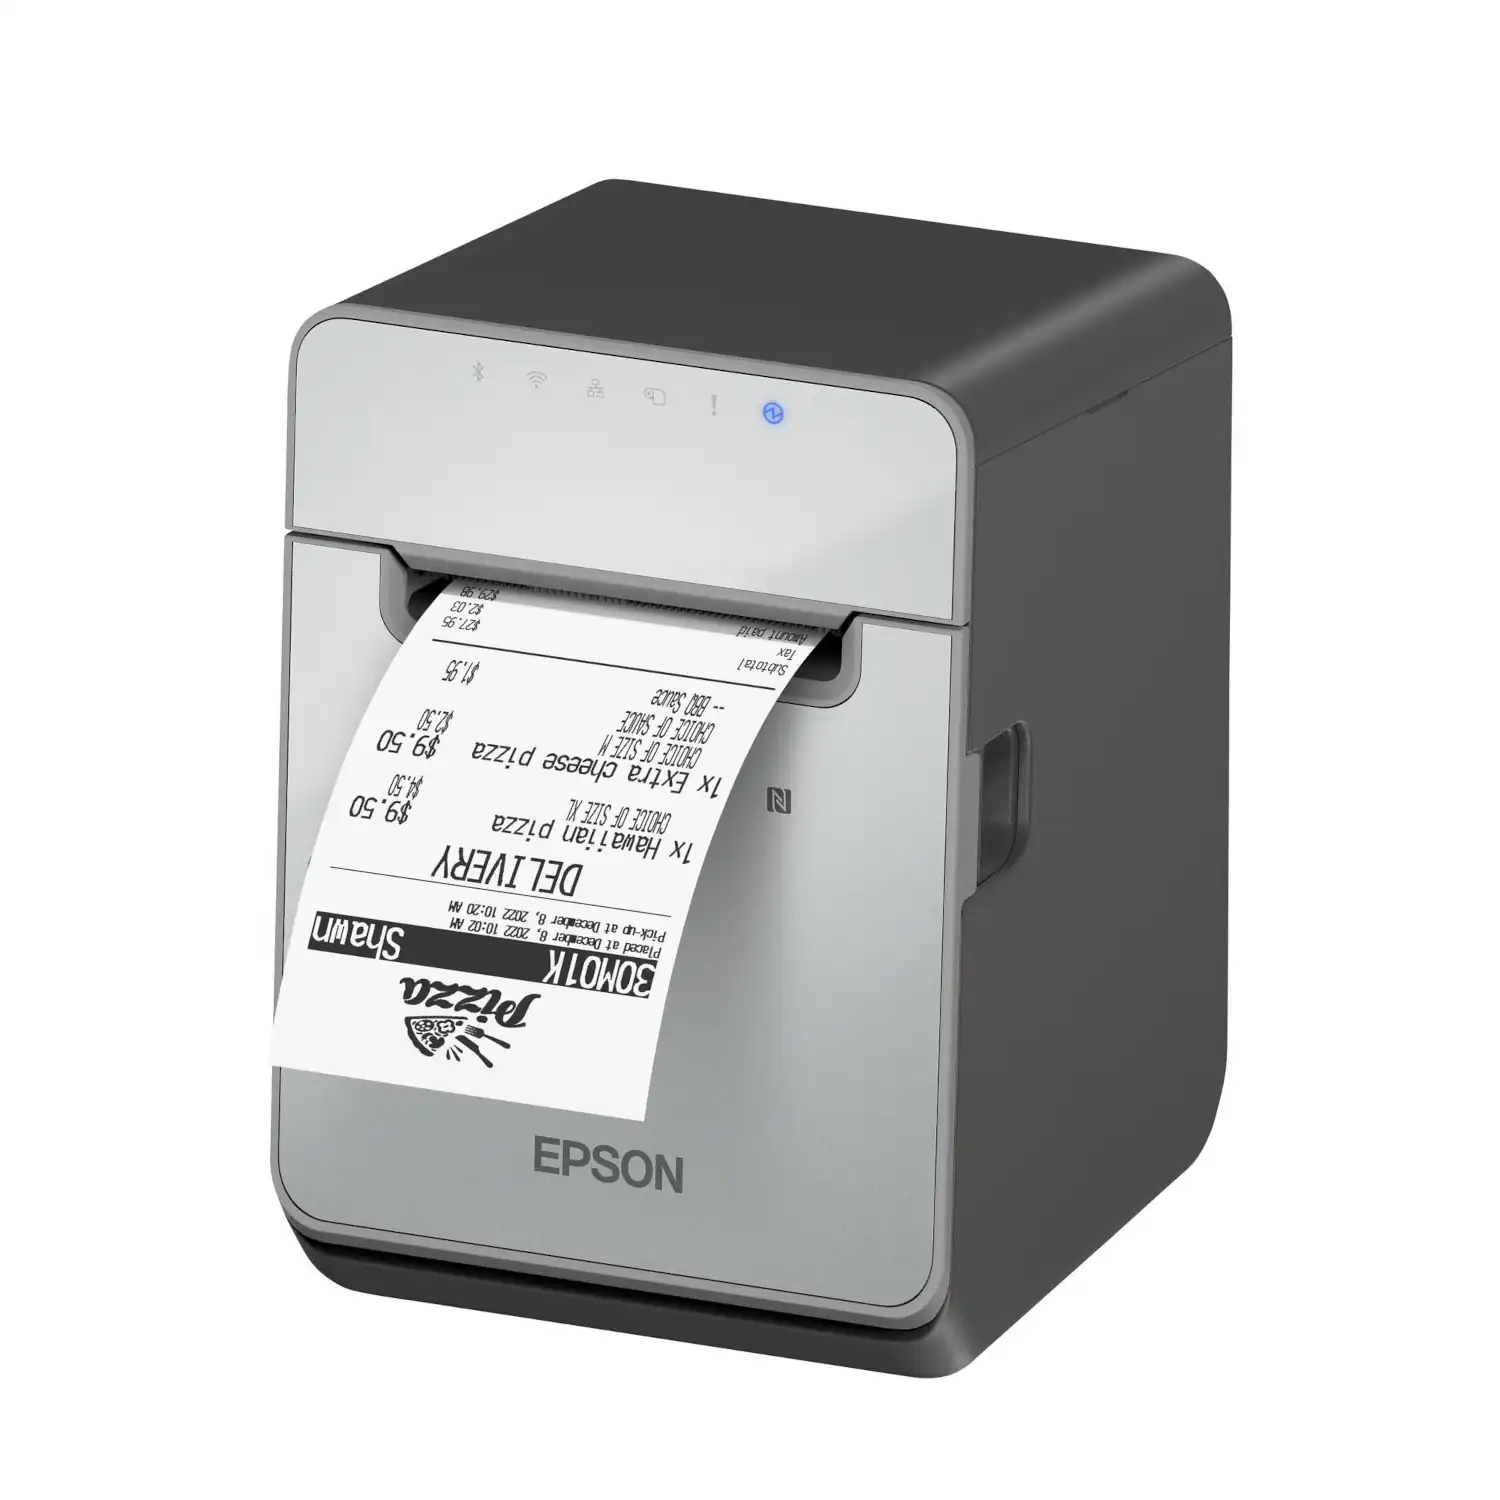 Epson TM-L100 Label Printer Upright